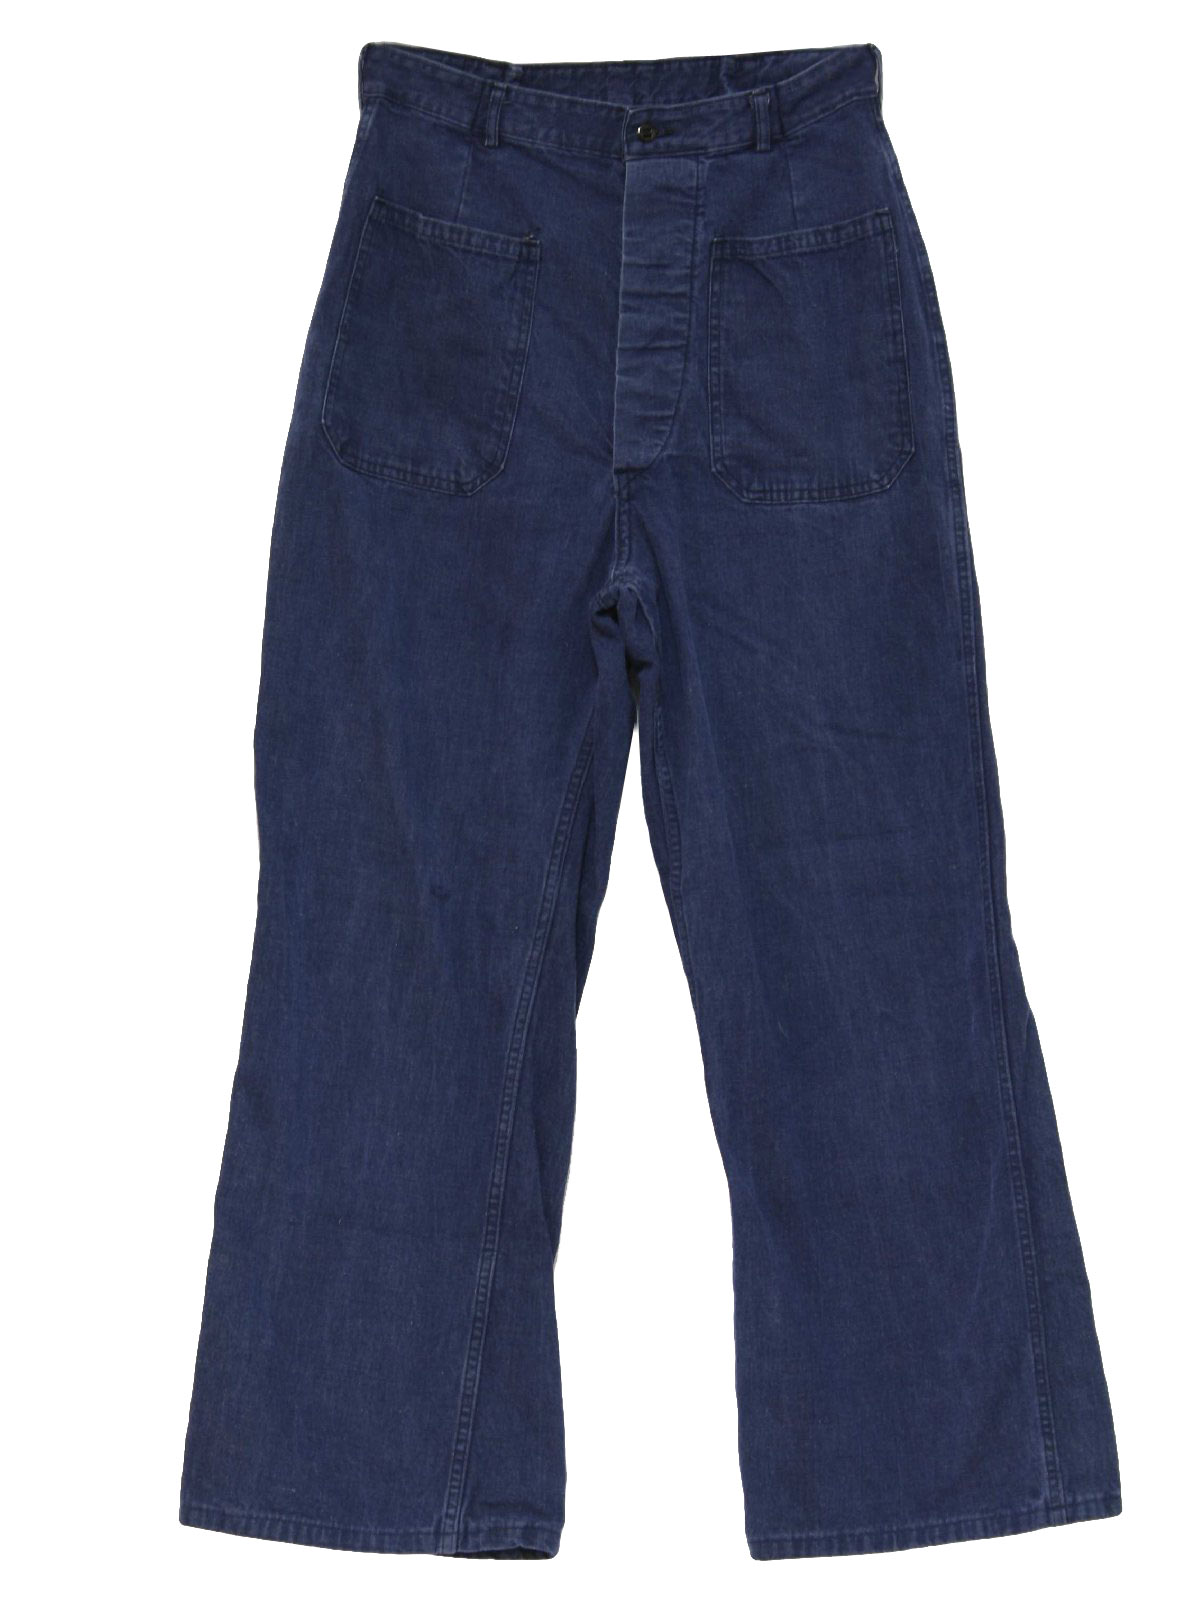 1960's Bellbottom Pants: 60s -no label- Mens denim blue cotton Navy ...